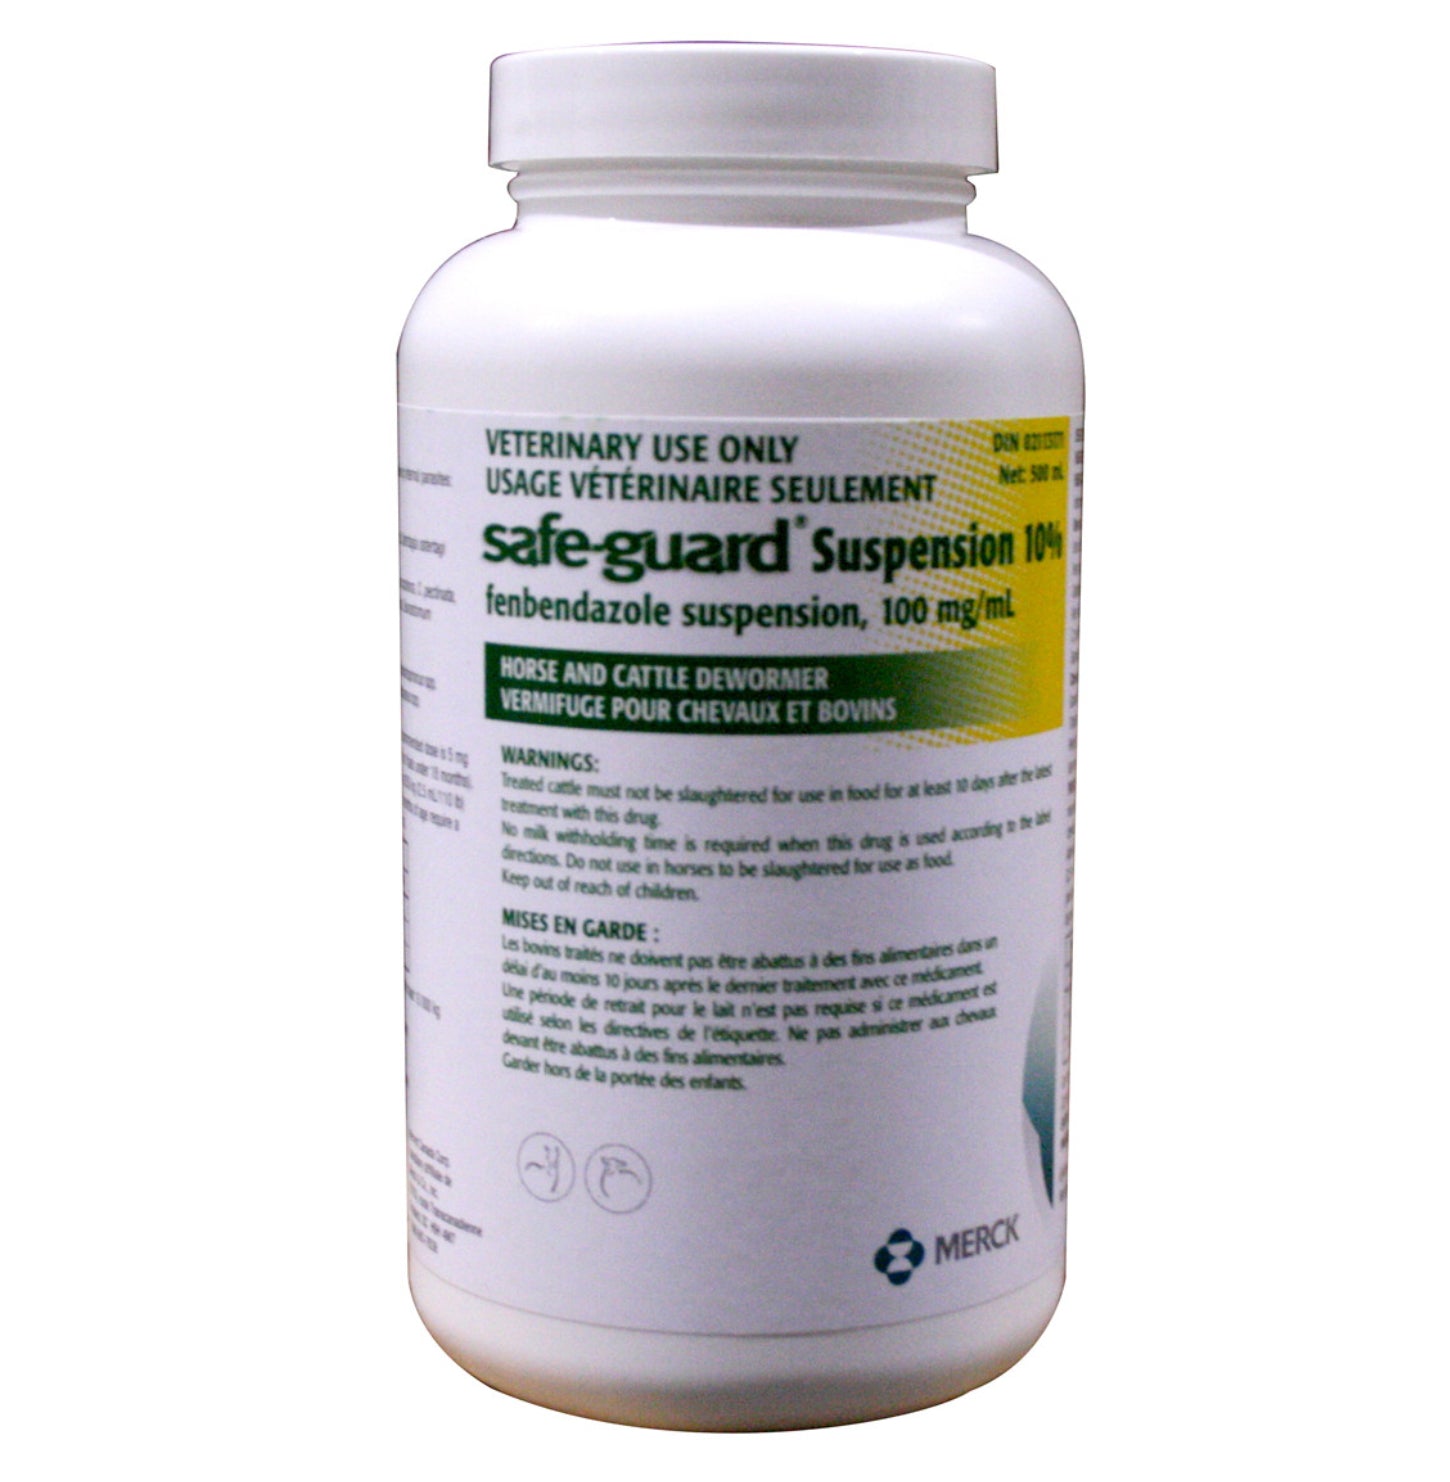 Safe-Guard (Fenbendazole Suspension) Liquid Wormer